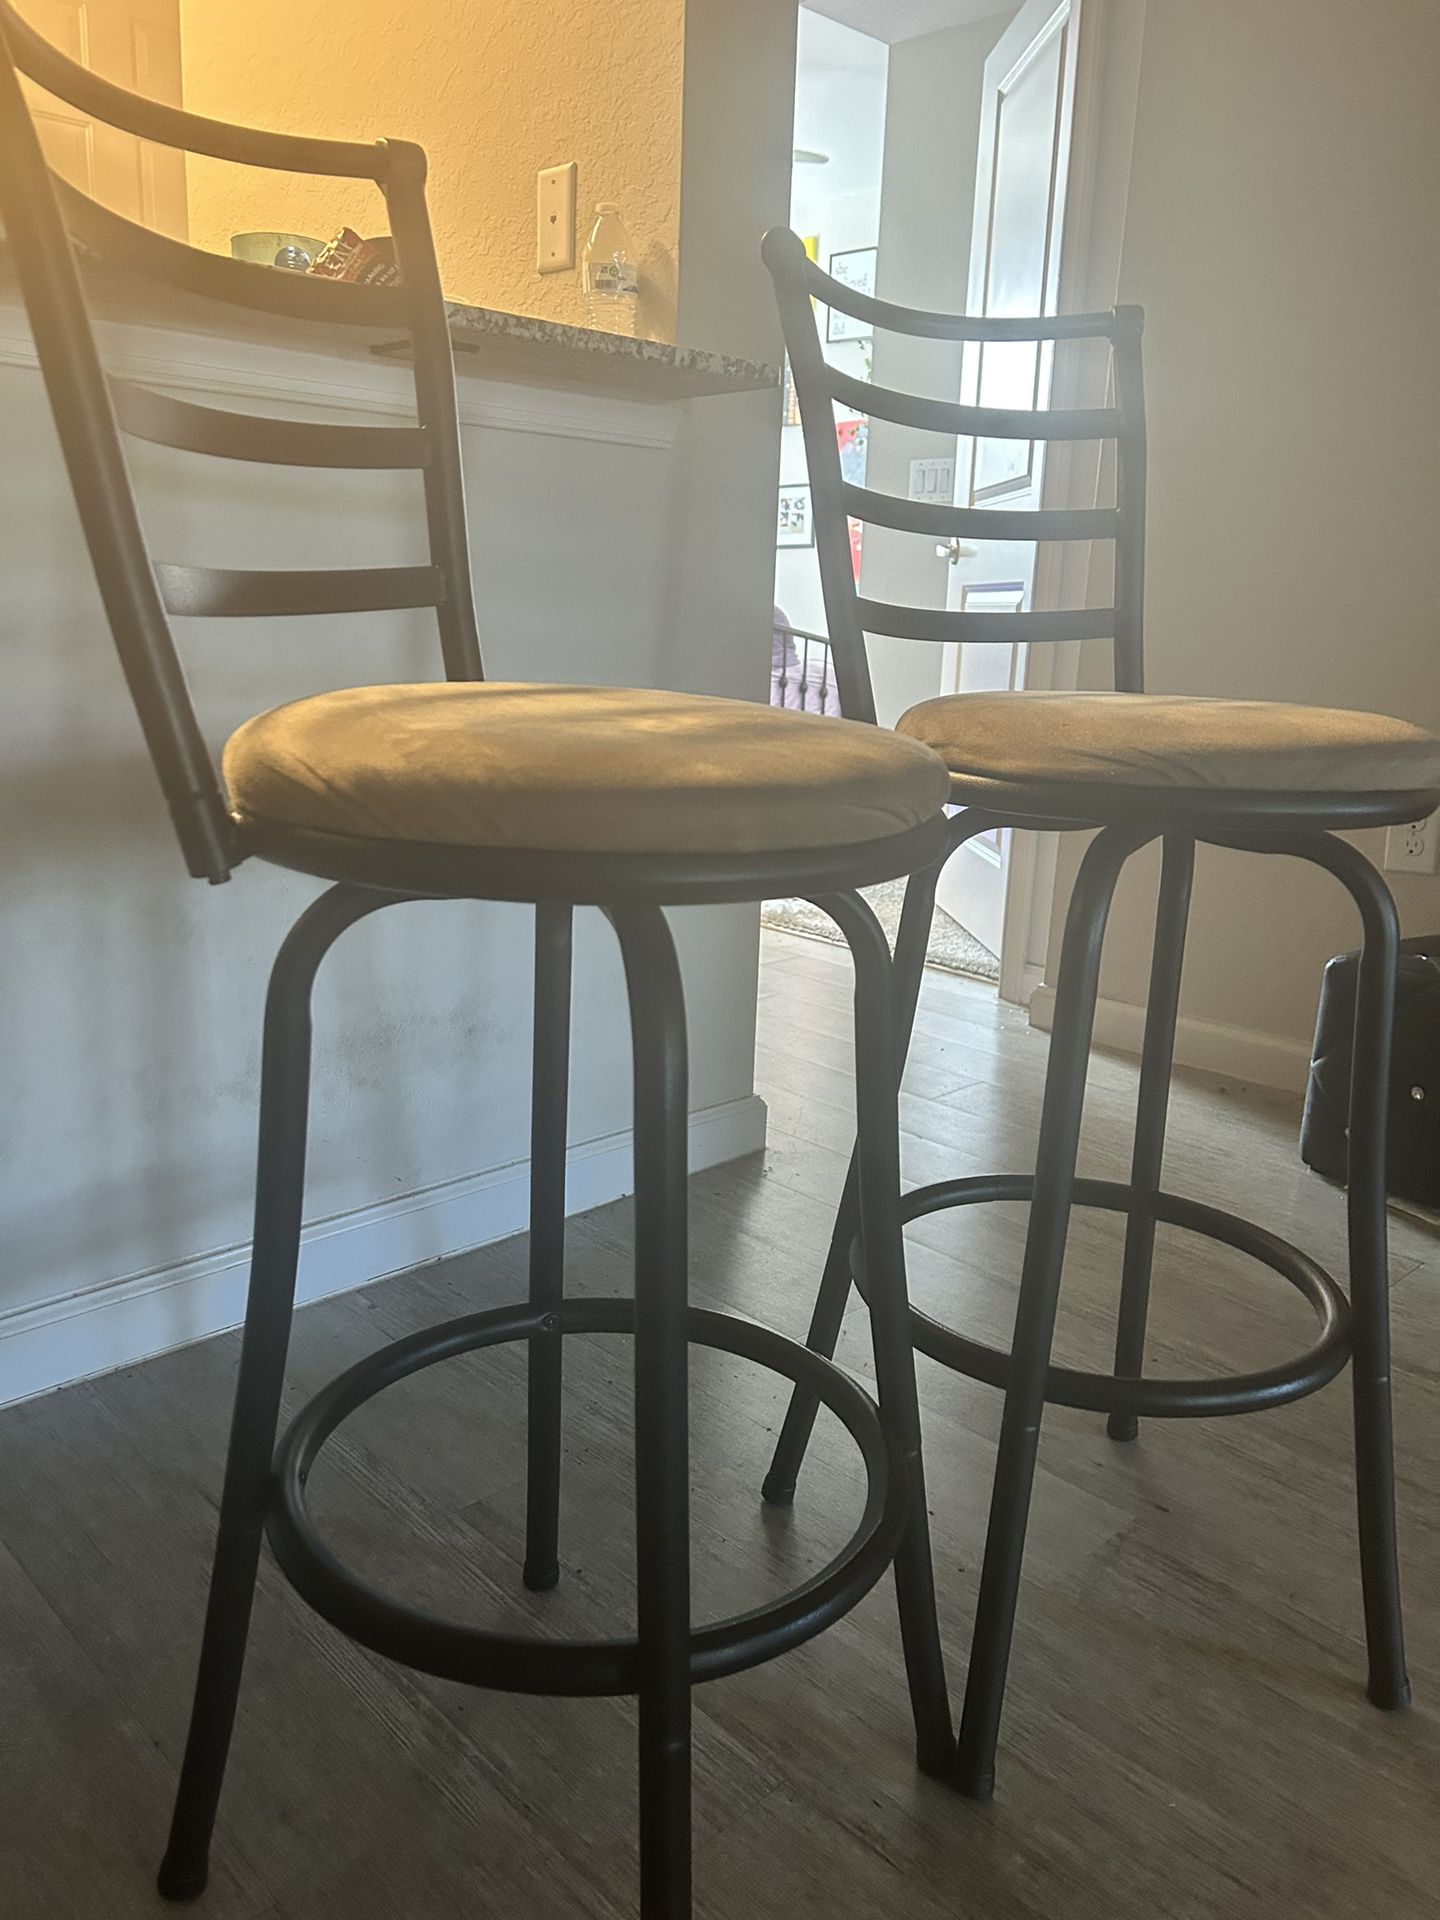 2 Bar Stool Chairs 